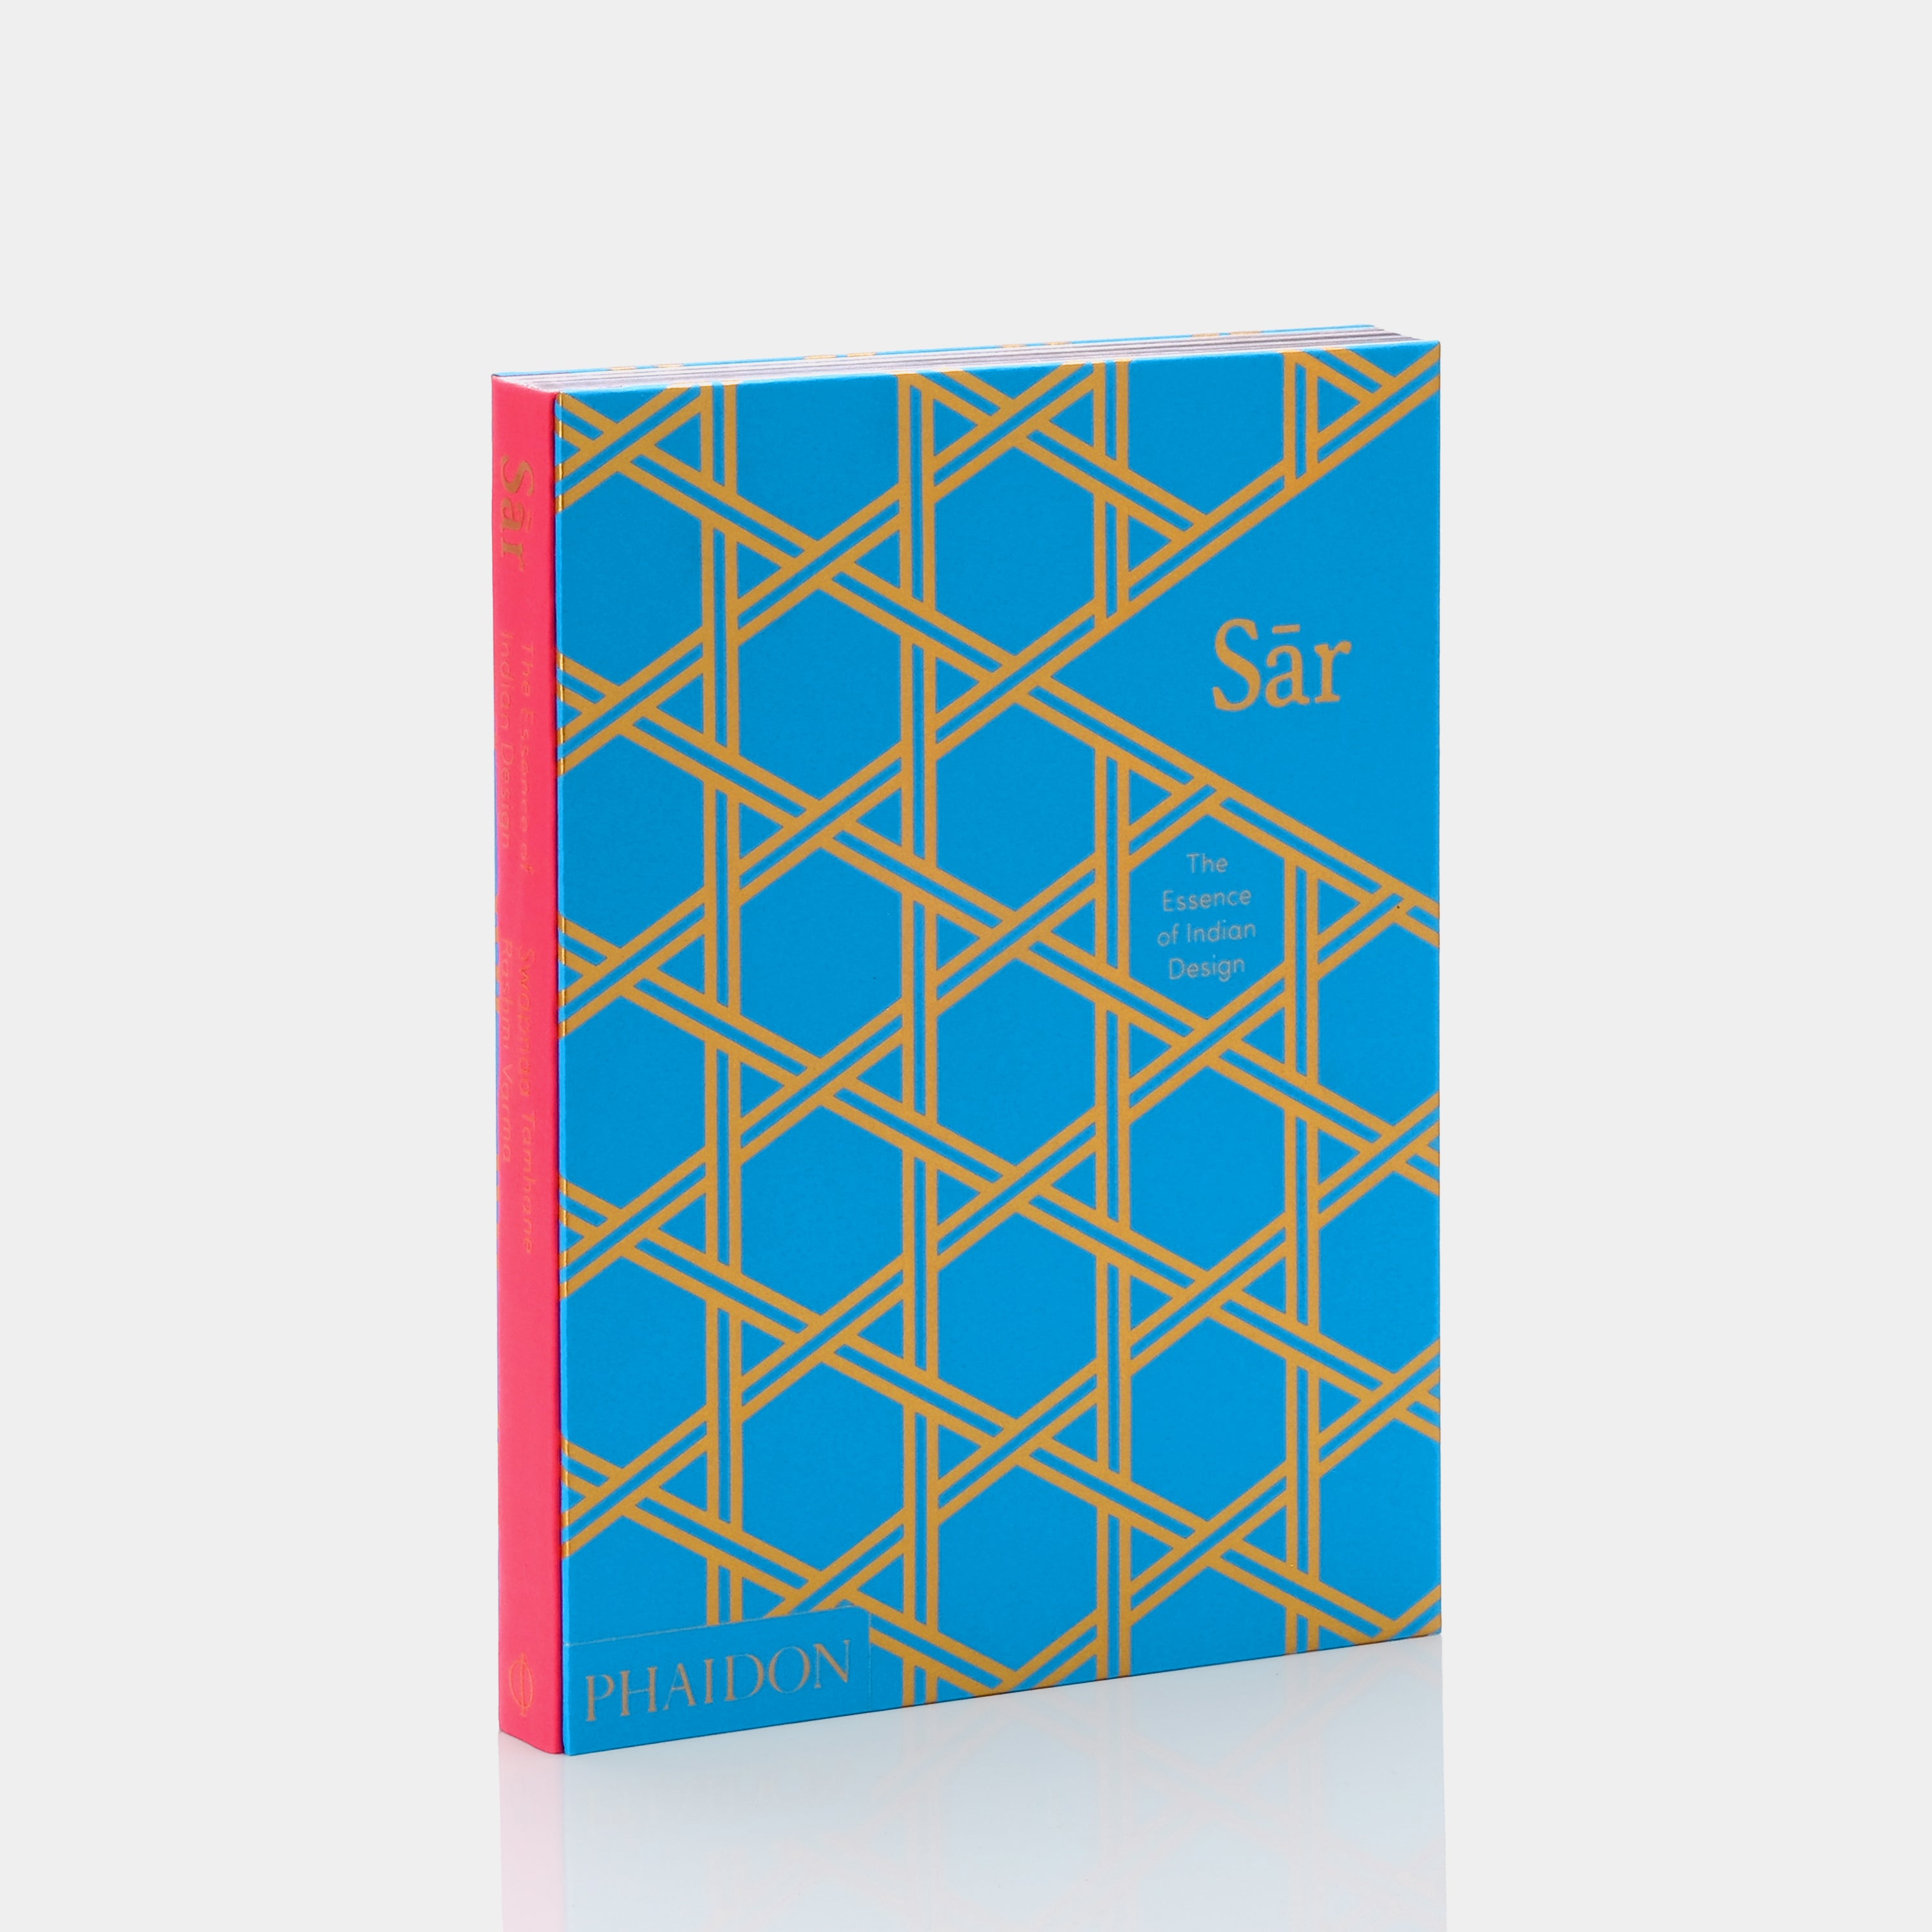 Sar, The Essence of Indian Design Phaidon Book